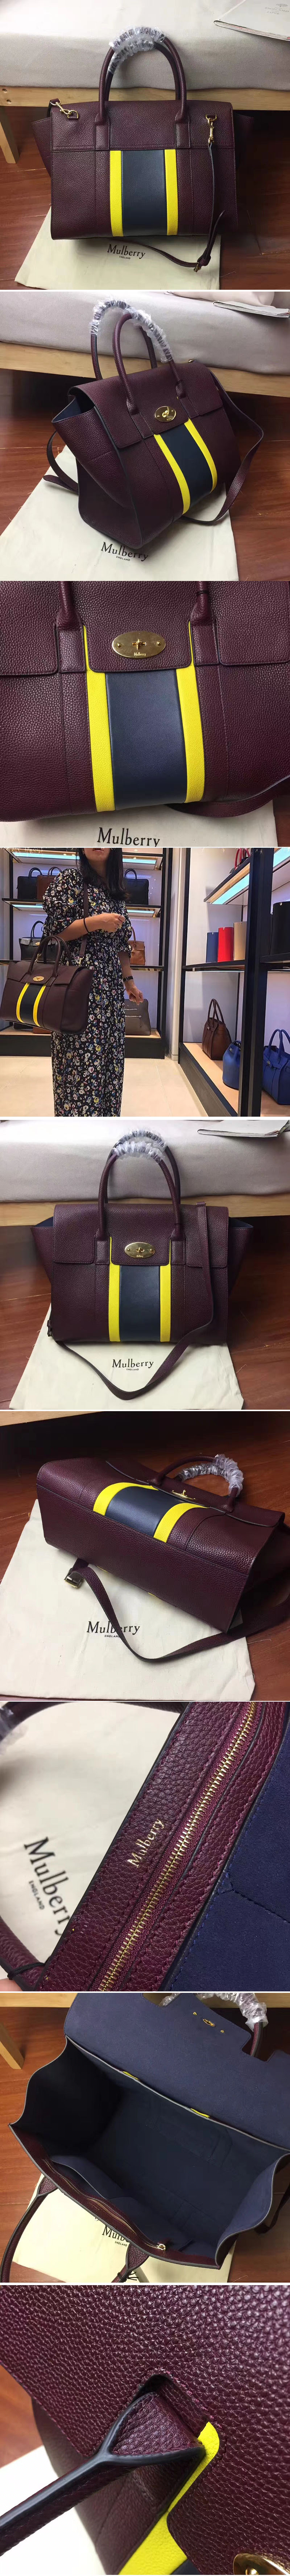 Replica Mulberry Bags